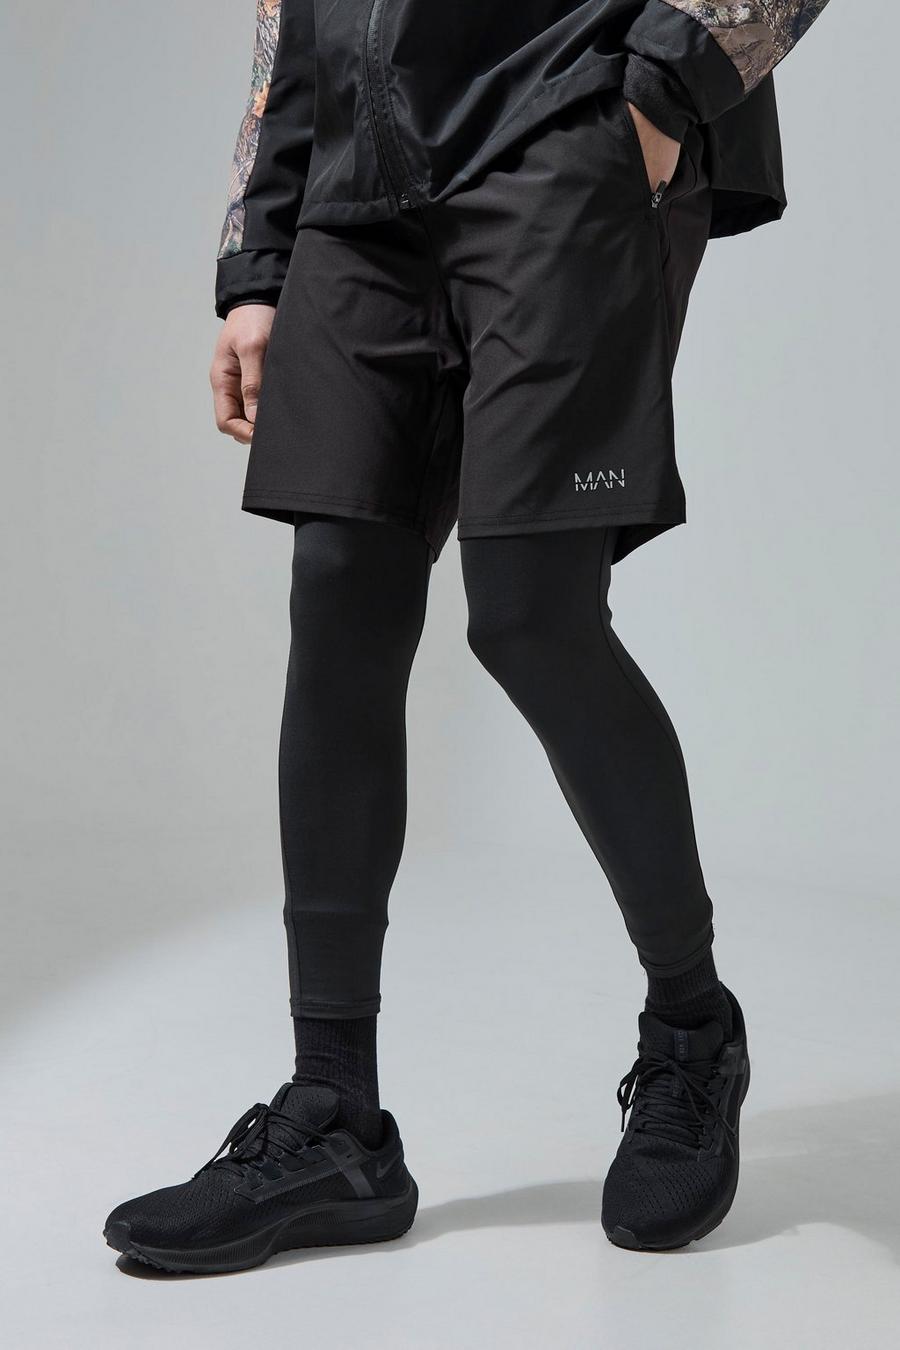 Man Active 2-in-1 Leggings-Shorts, Black